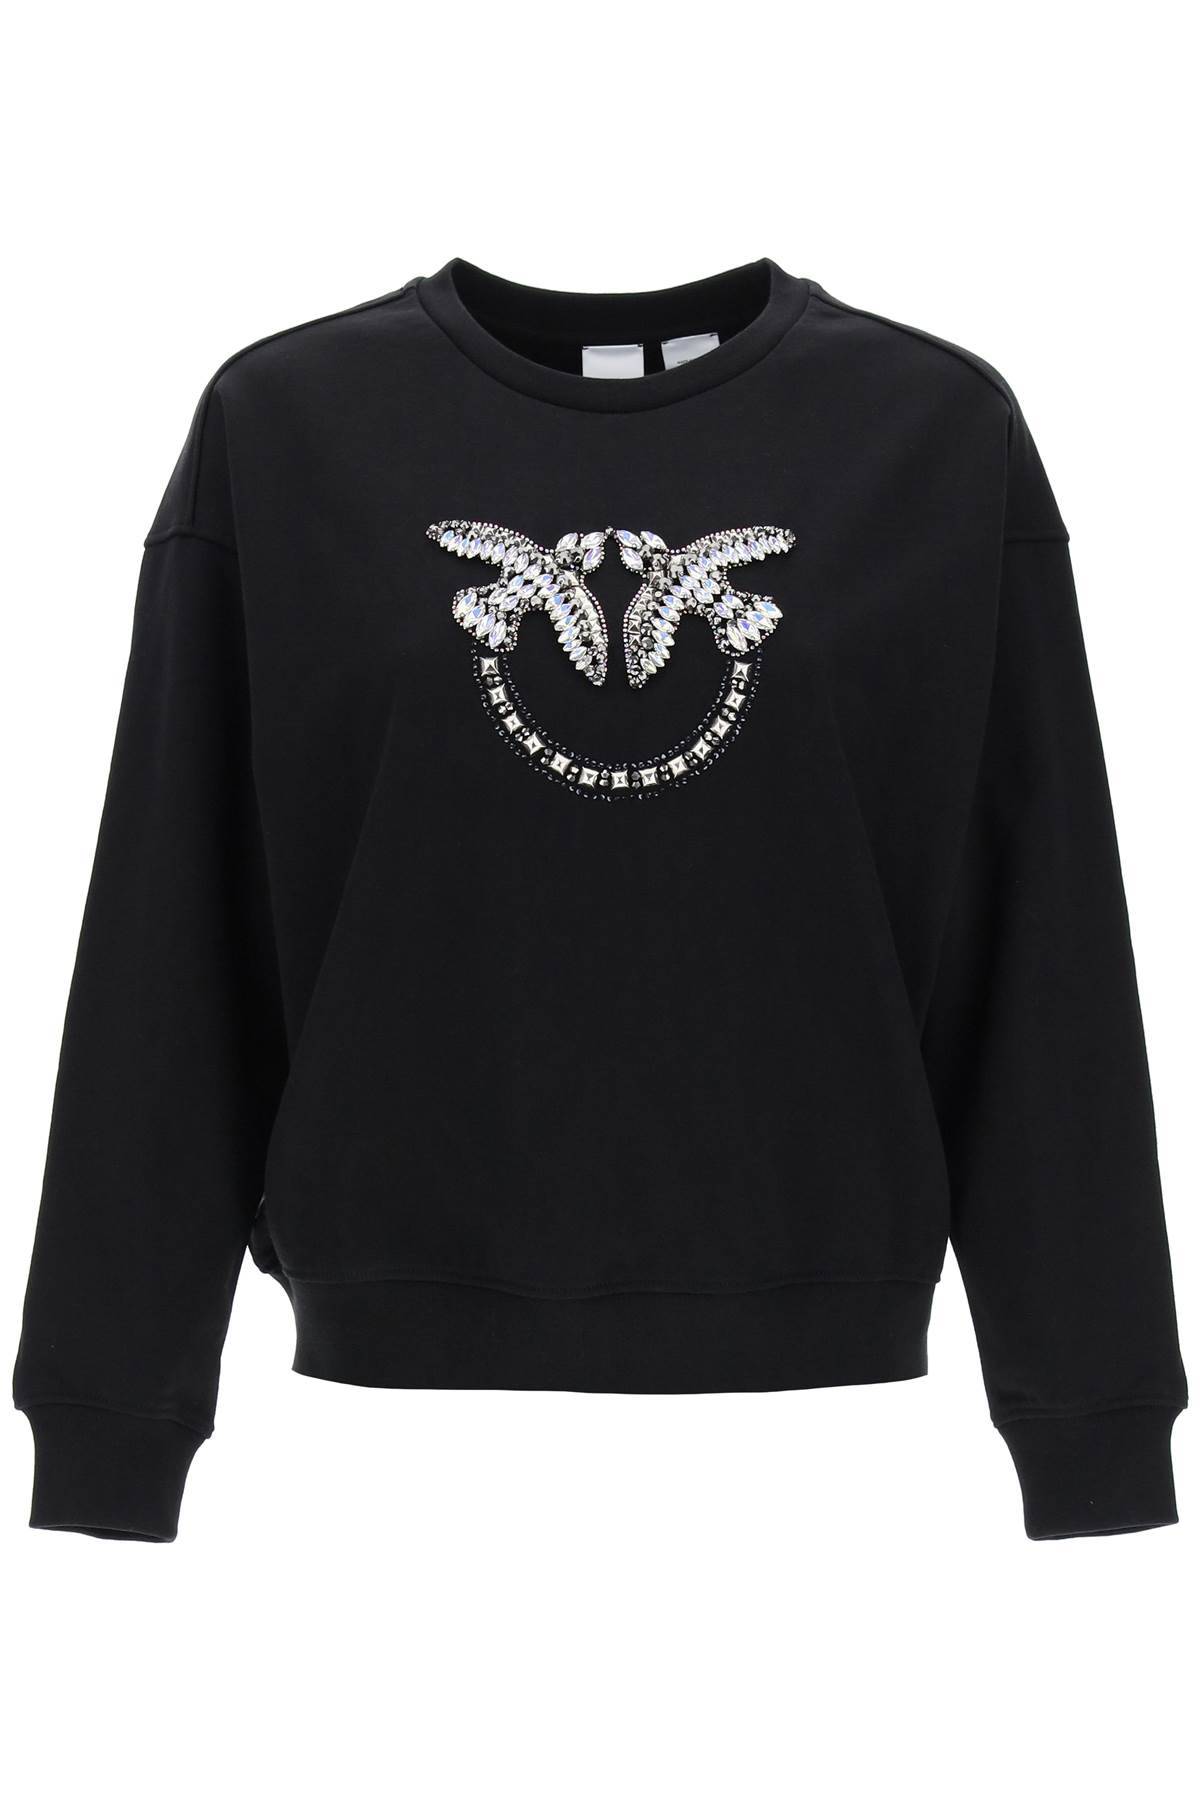 Pinko PINKO nelly sweatshirt with love birds embroidery